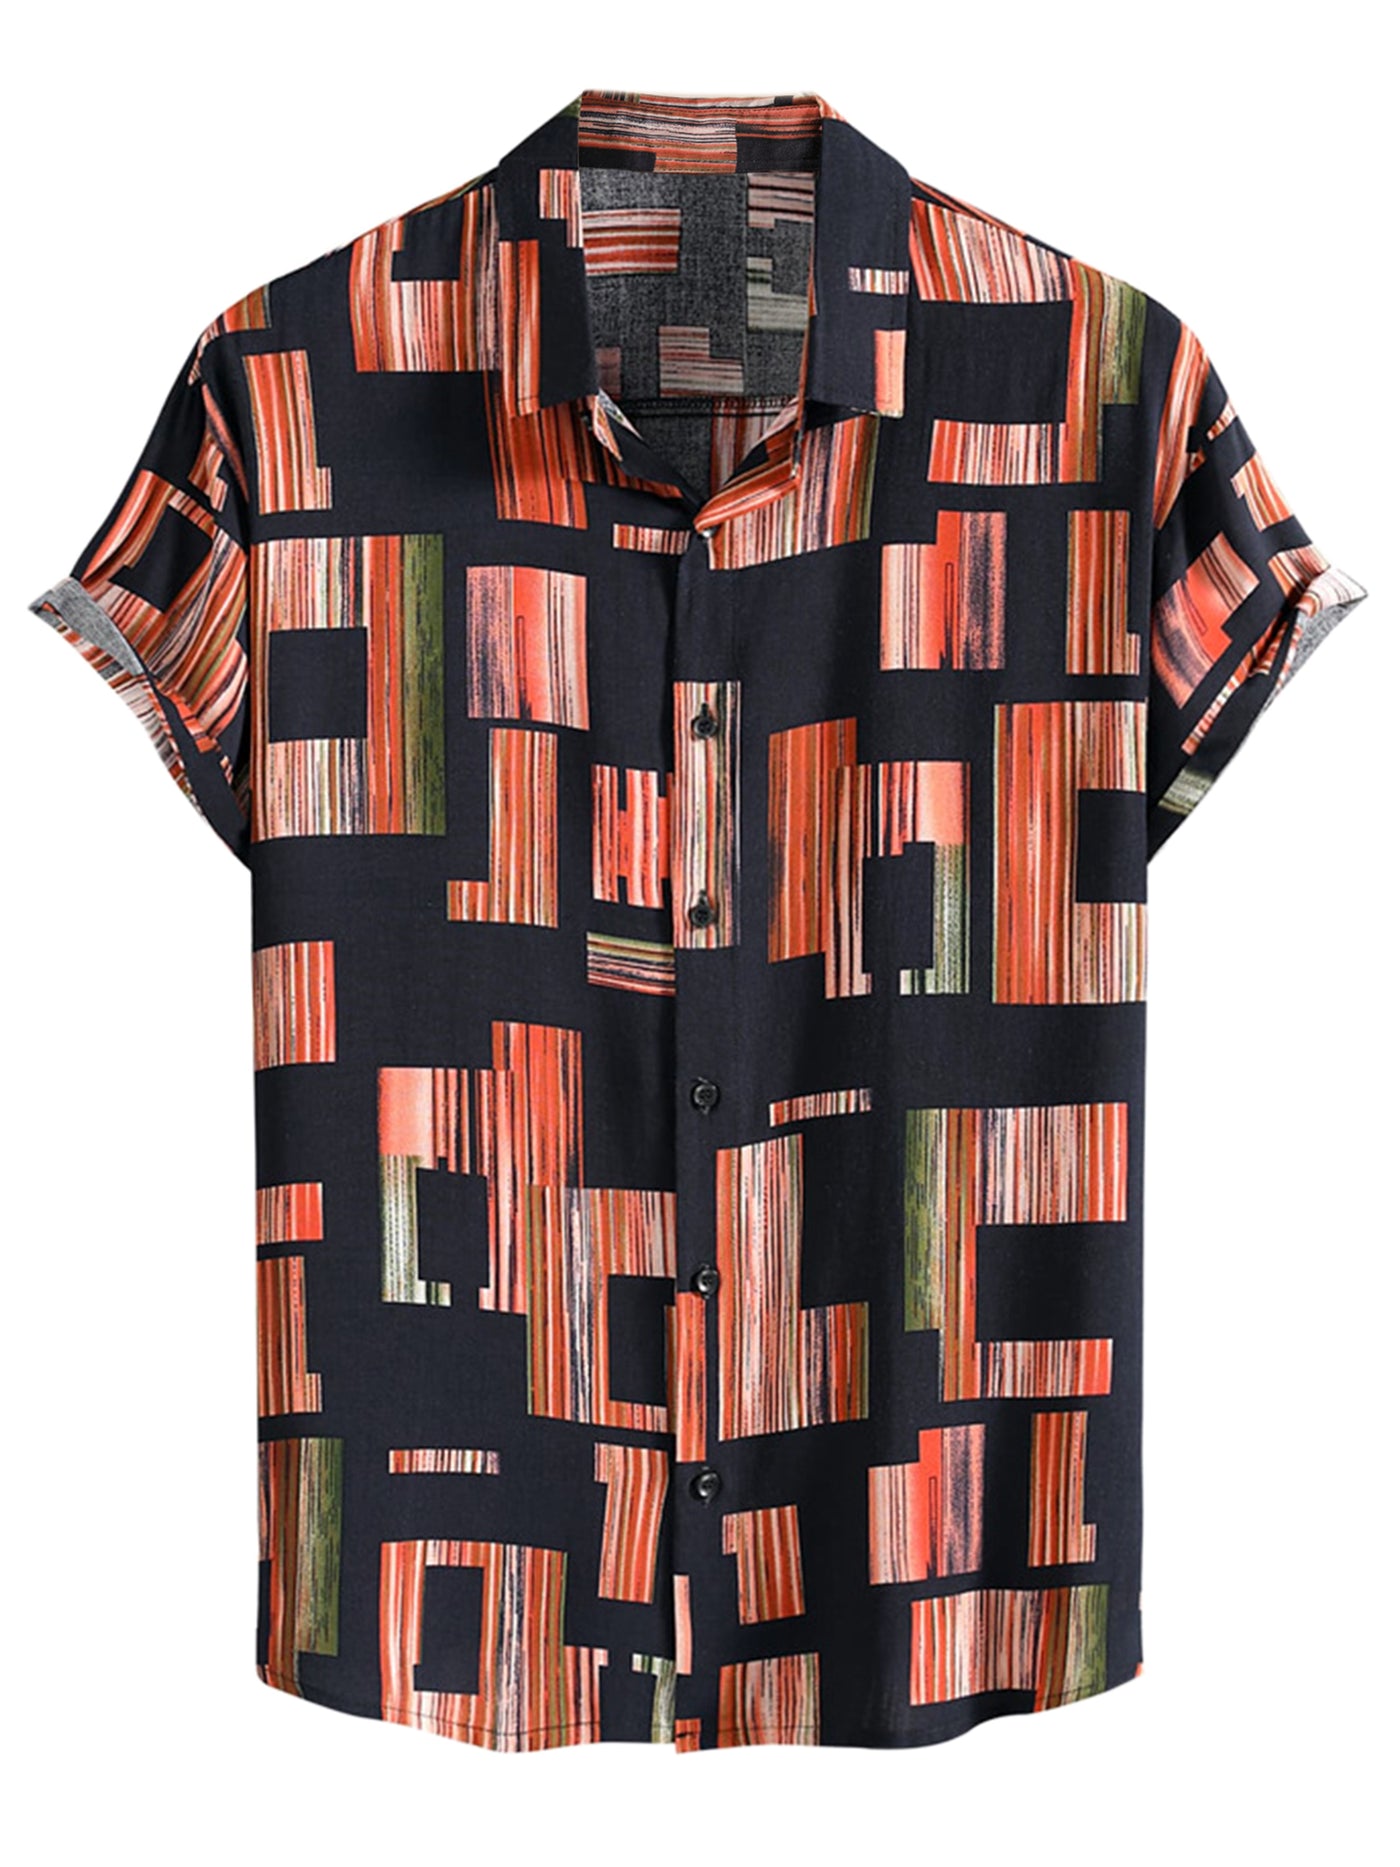 Bublédon Geometric Printed Shirt for Men's Summer Short Sleeves Beach Hawaiian Shirts